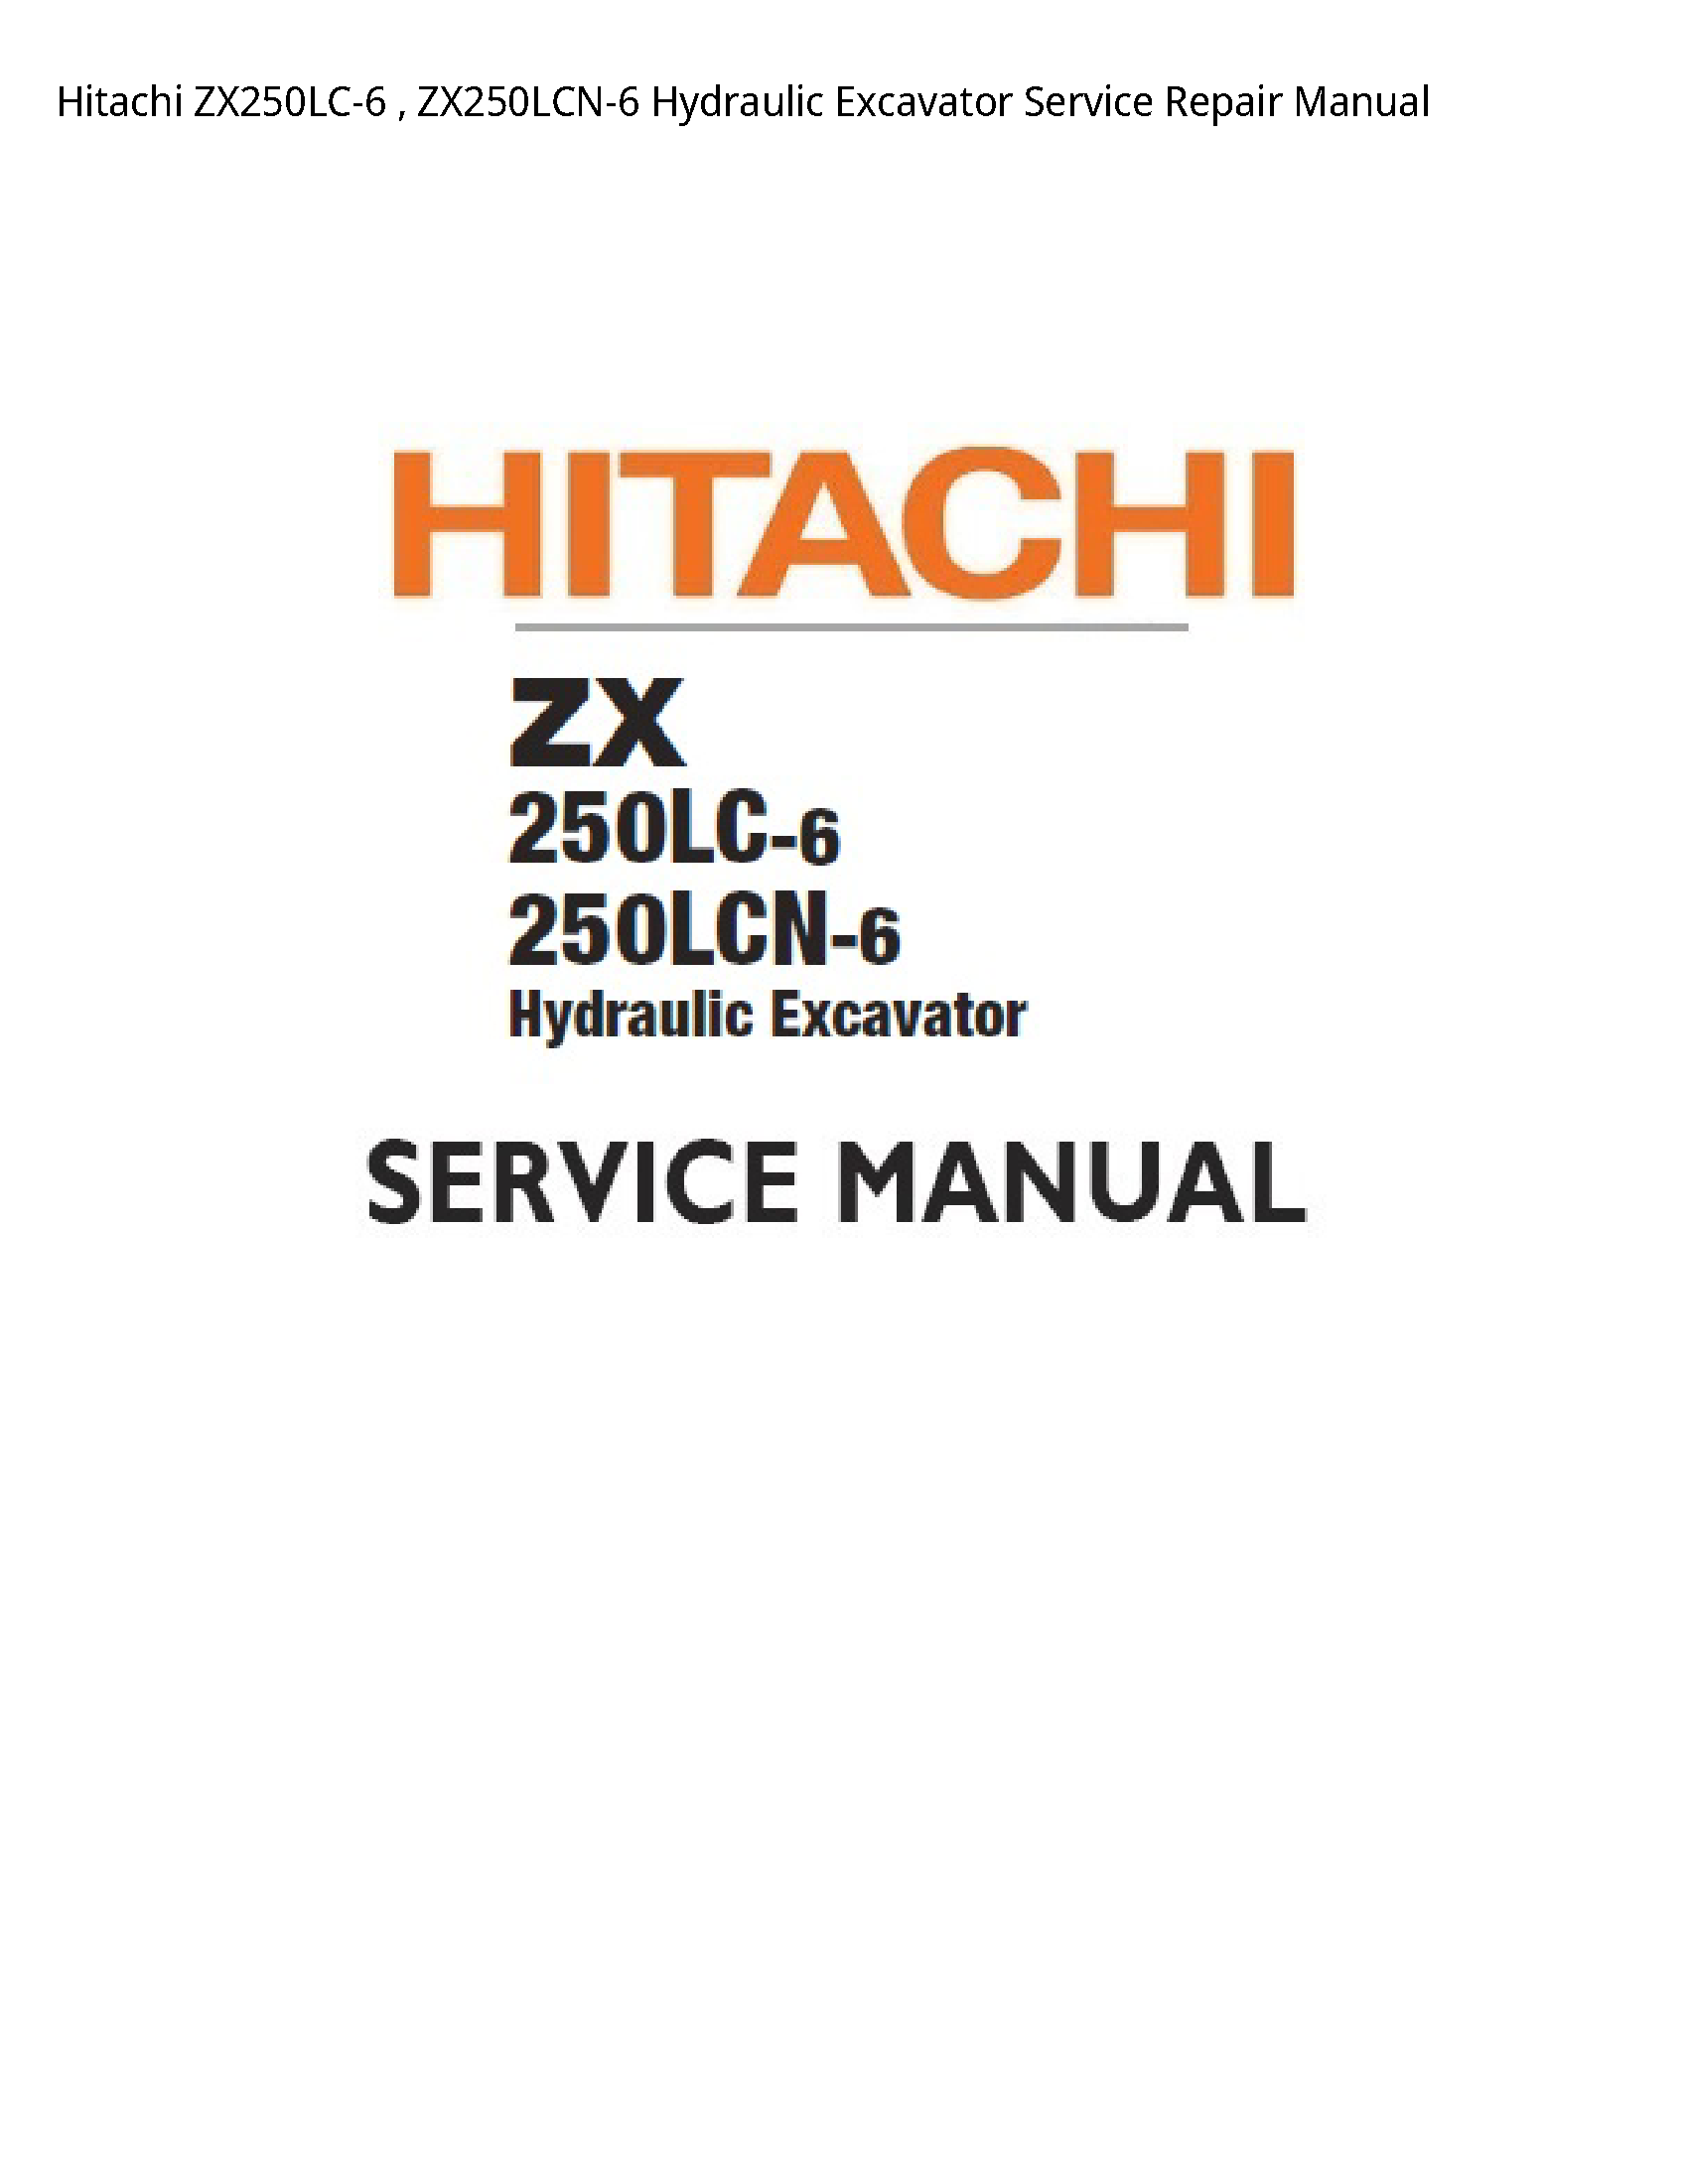 Hitachi ZX250LC-6 Hydraulic Excavator manual